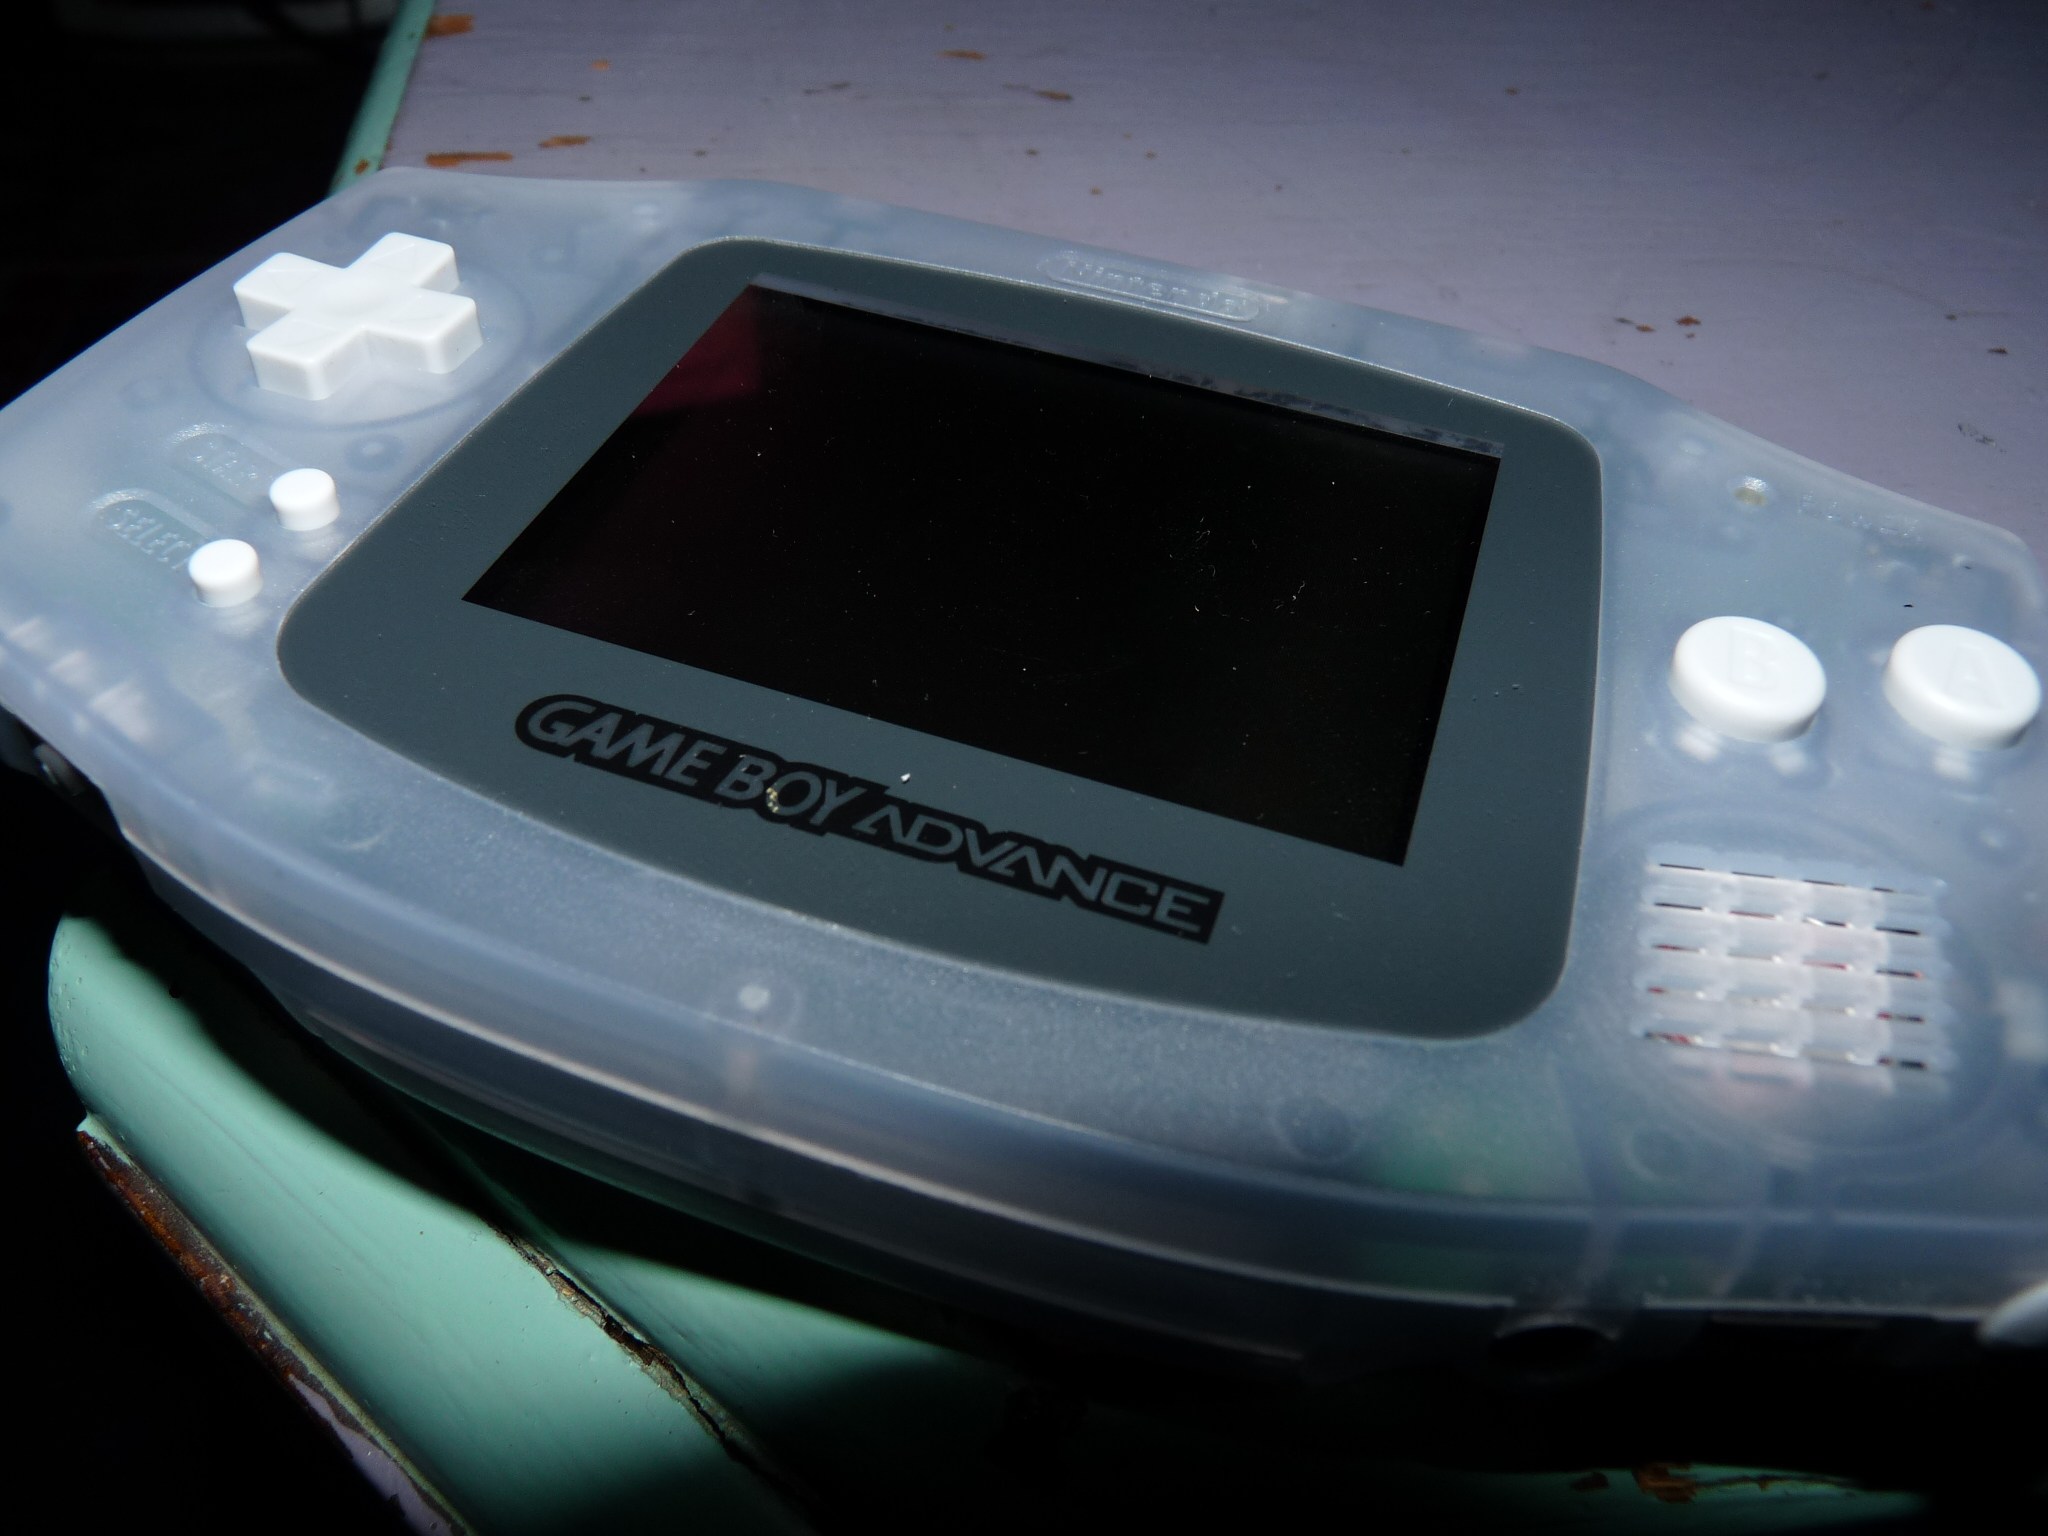 Virtual GameBoy: Portable GameBoy Emulator